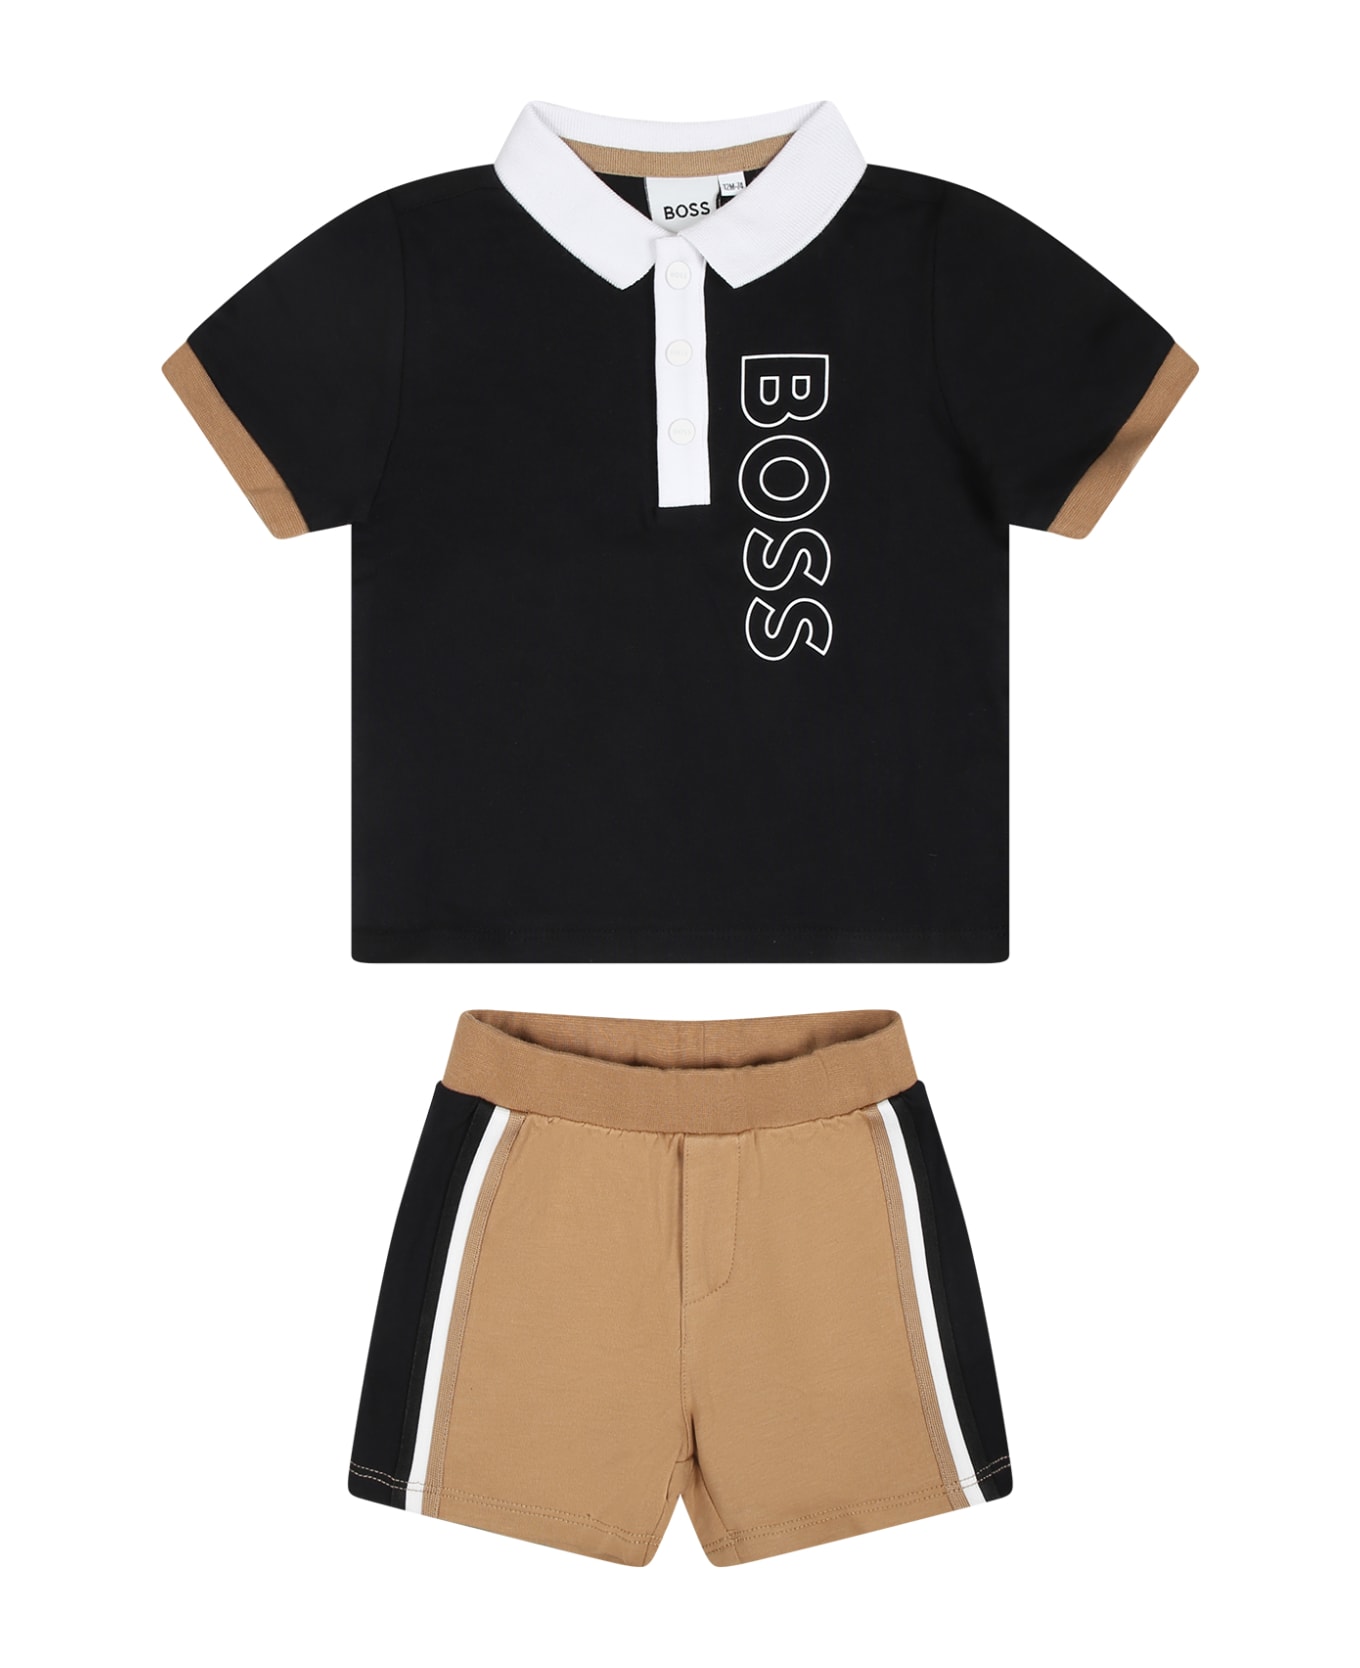 Hugo Boss Multicolor Sport Suit Set For Baby Boy - Multicolor